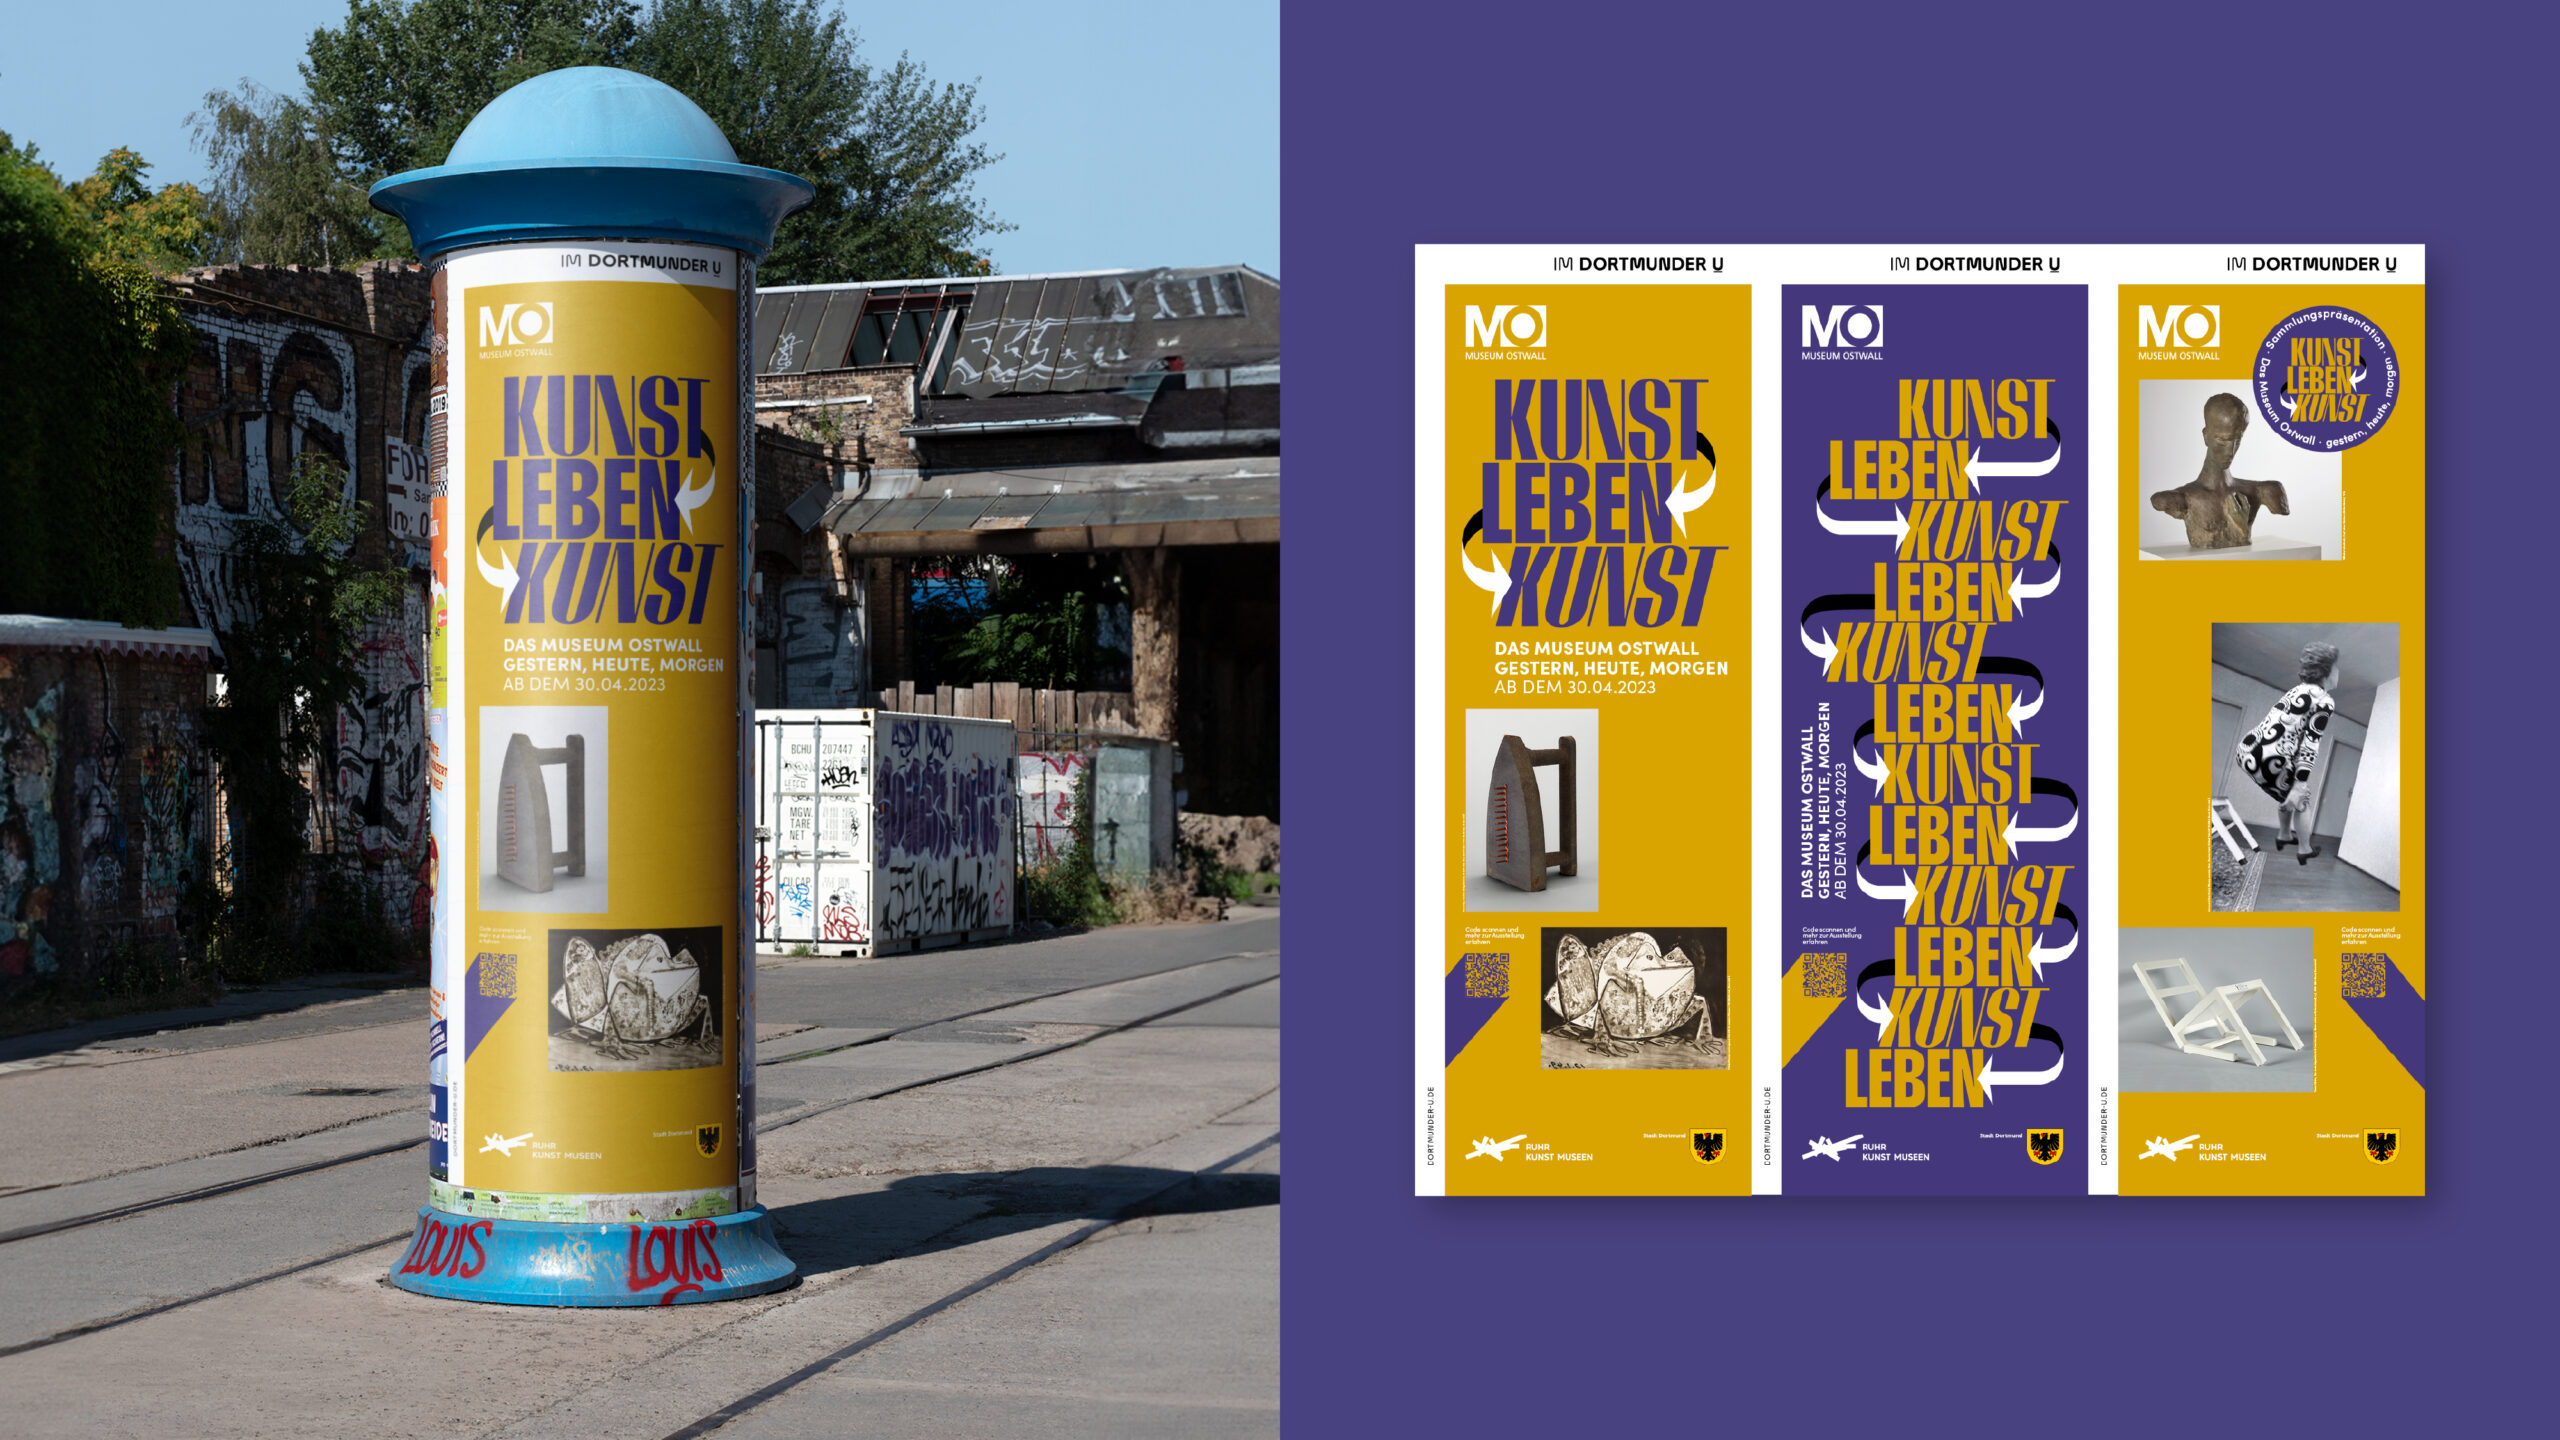 Advertising pillar for the exhibition Kunst Leben Kunst by Museum Ostwall in the Dortmunder U - Design by Florida Brand Design.